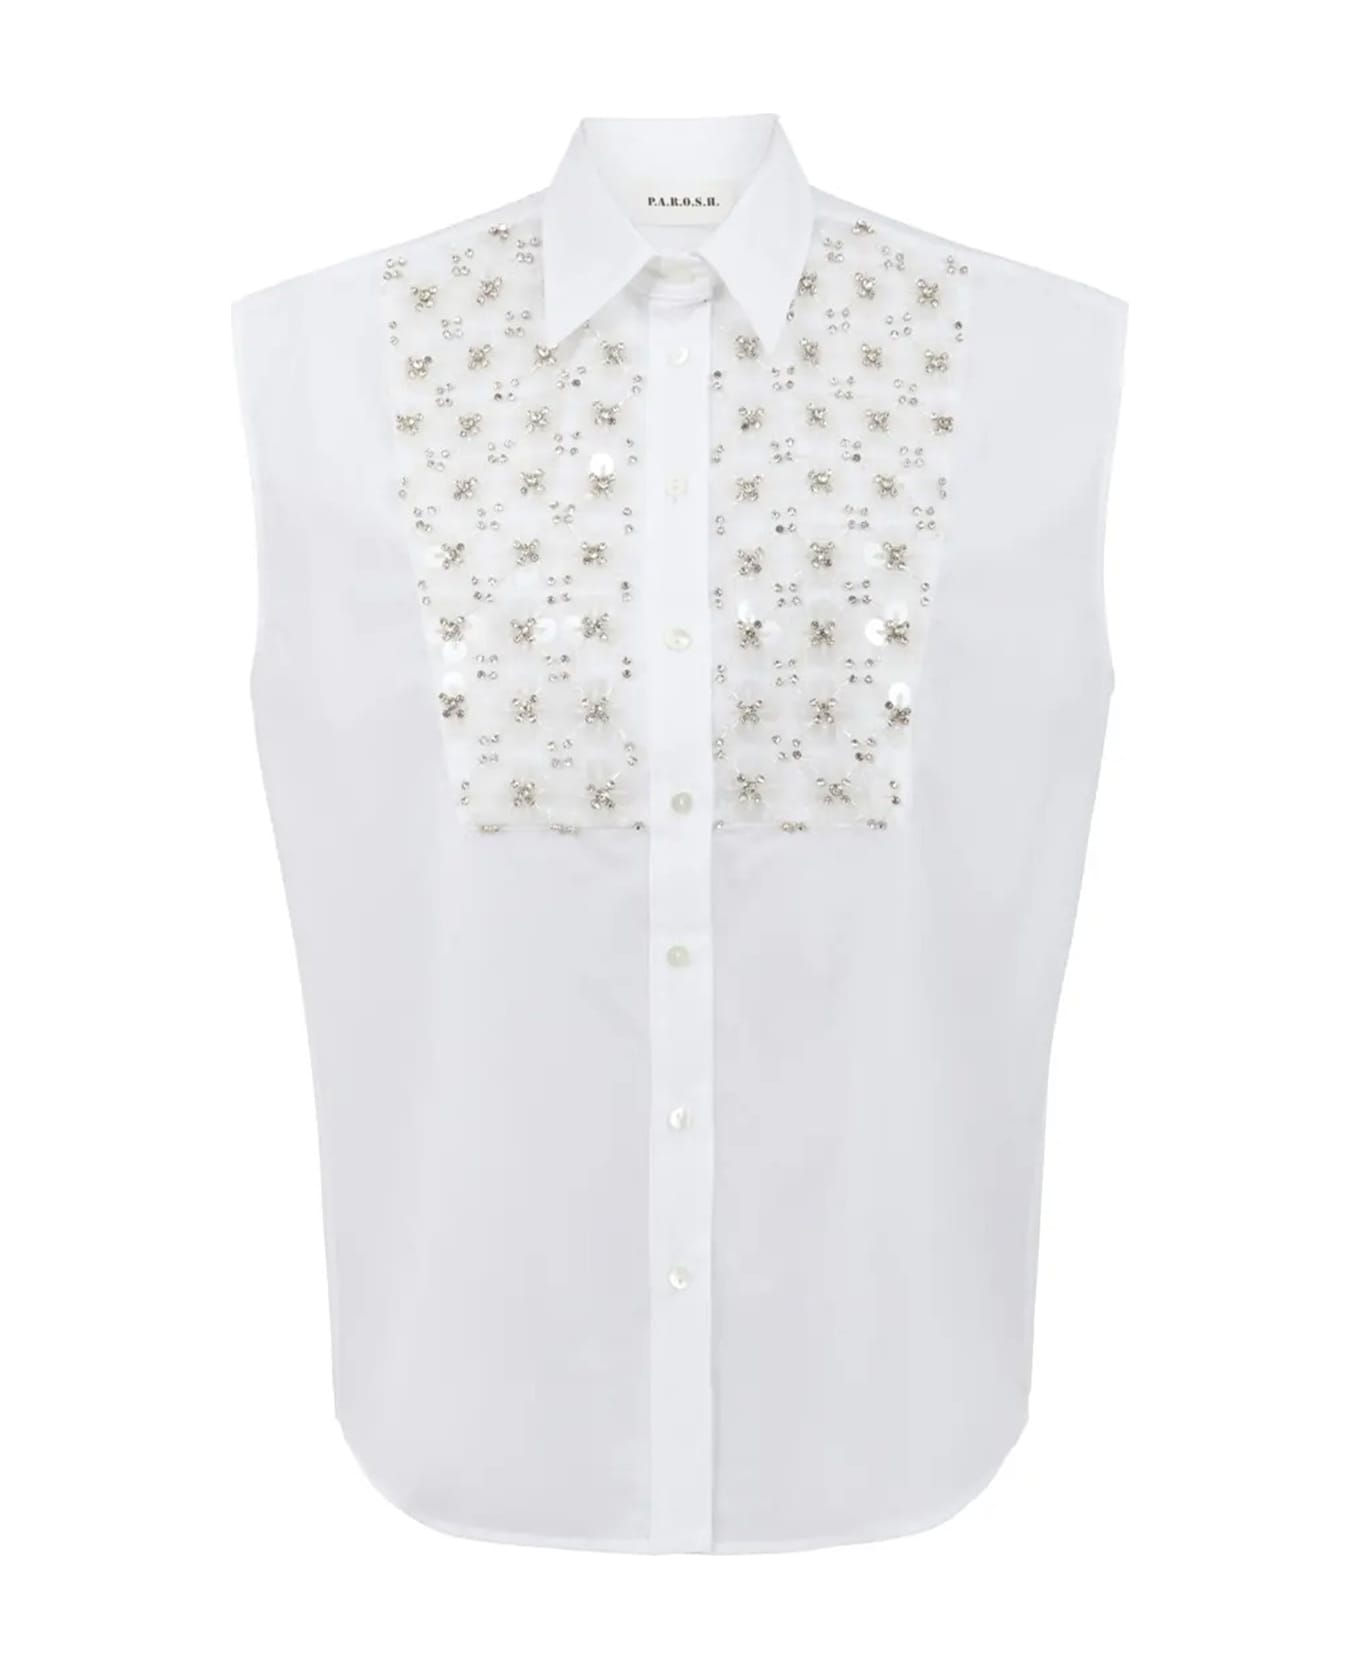 Parosh White Sleeveless Shirt - BIANCO